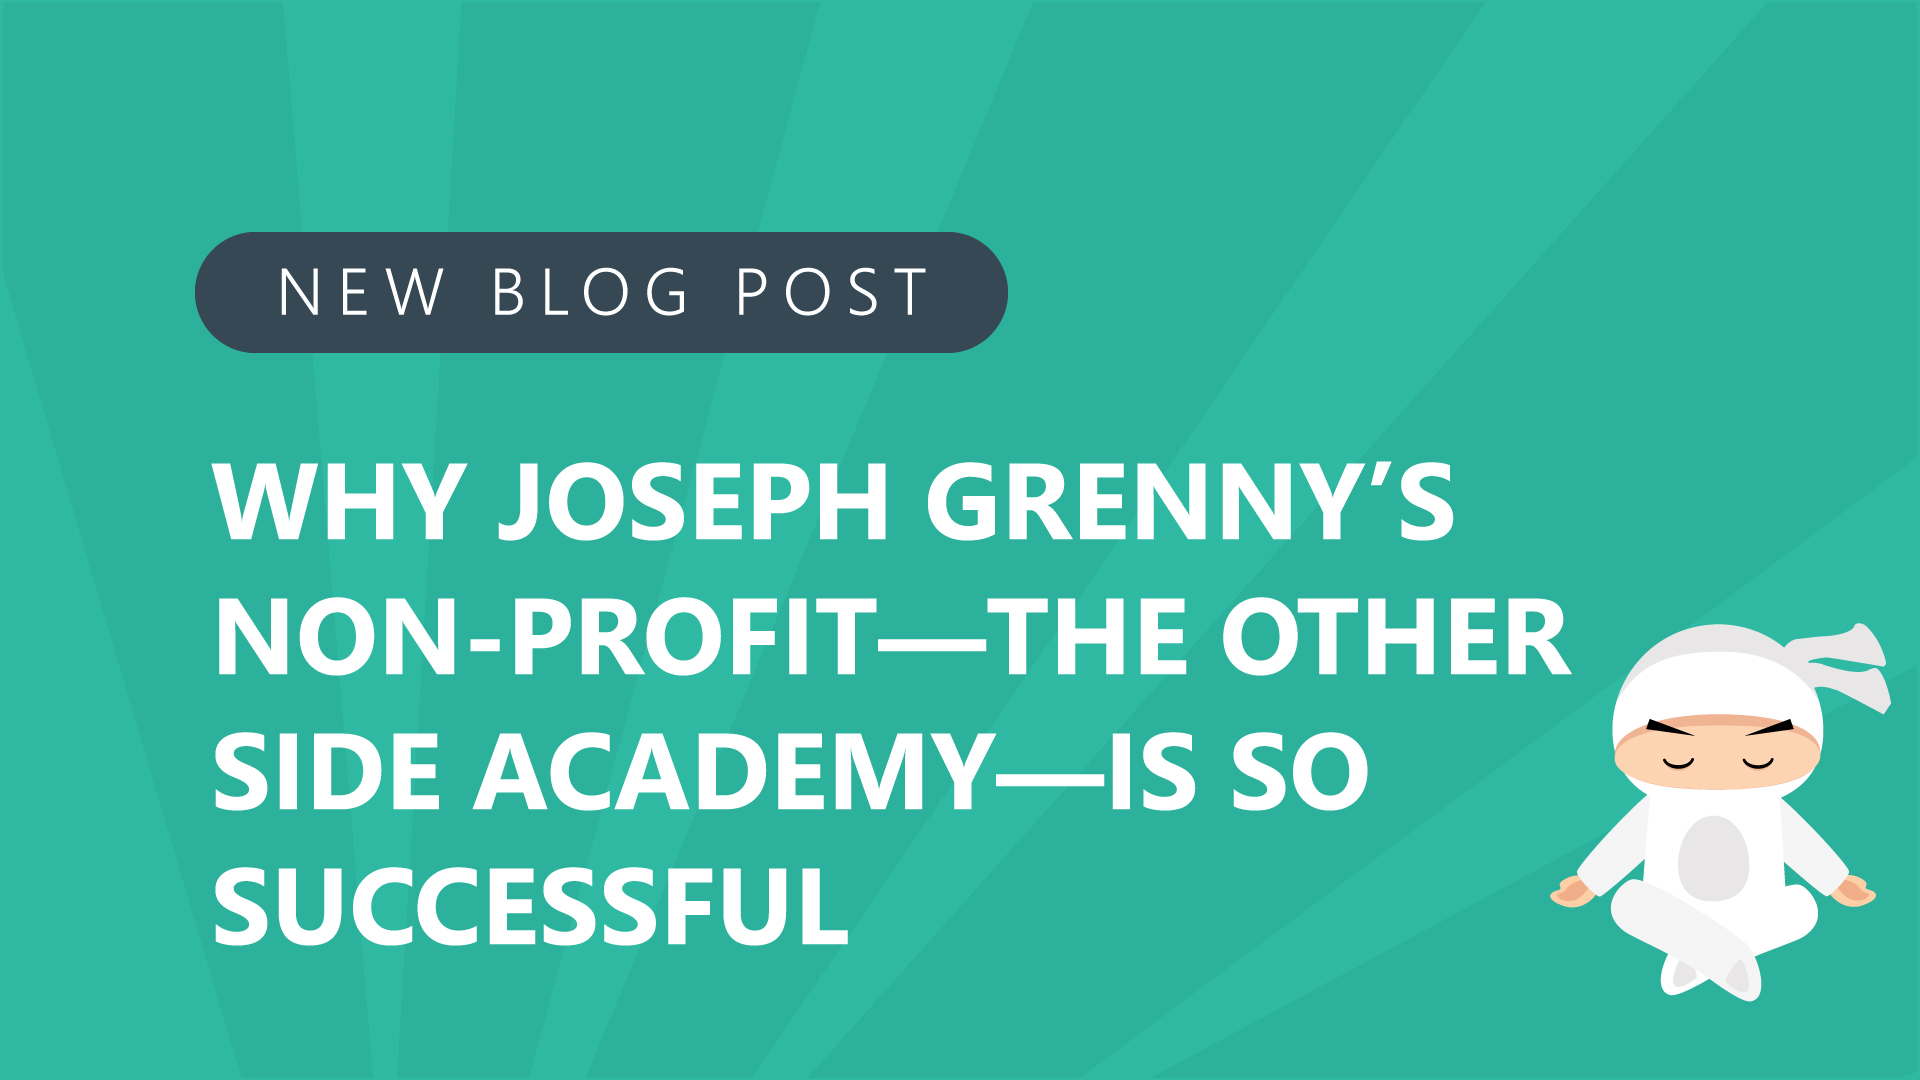 The Other Side Academy Joseph Grenny